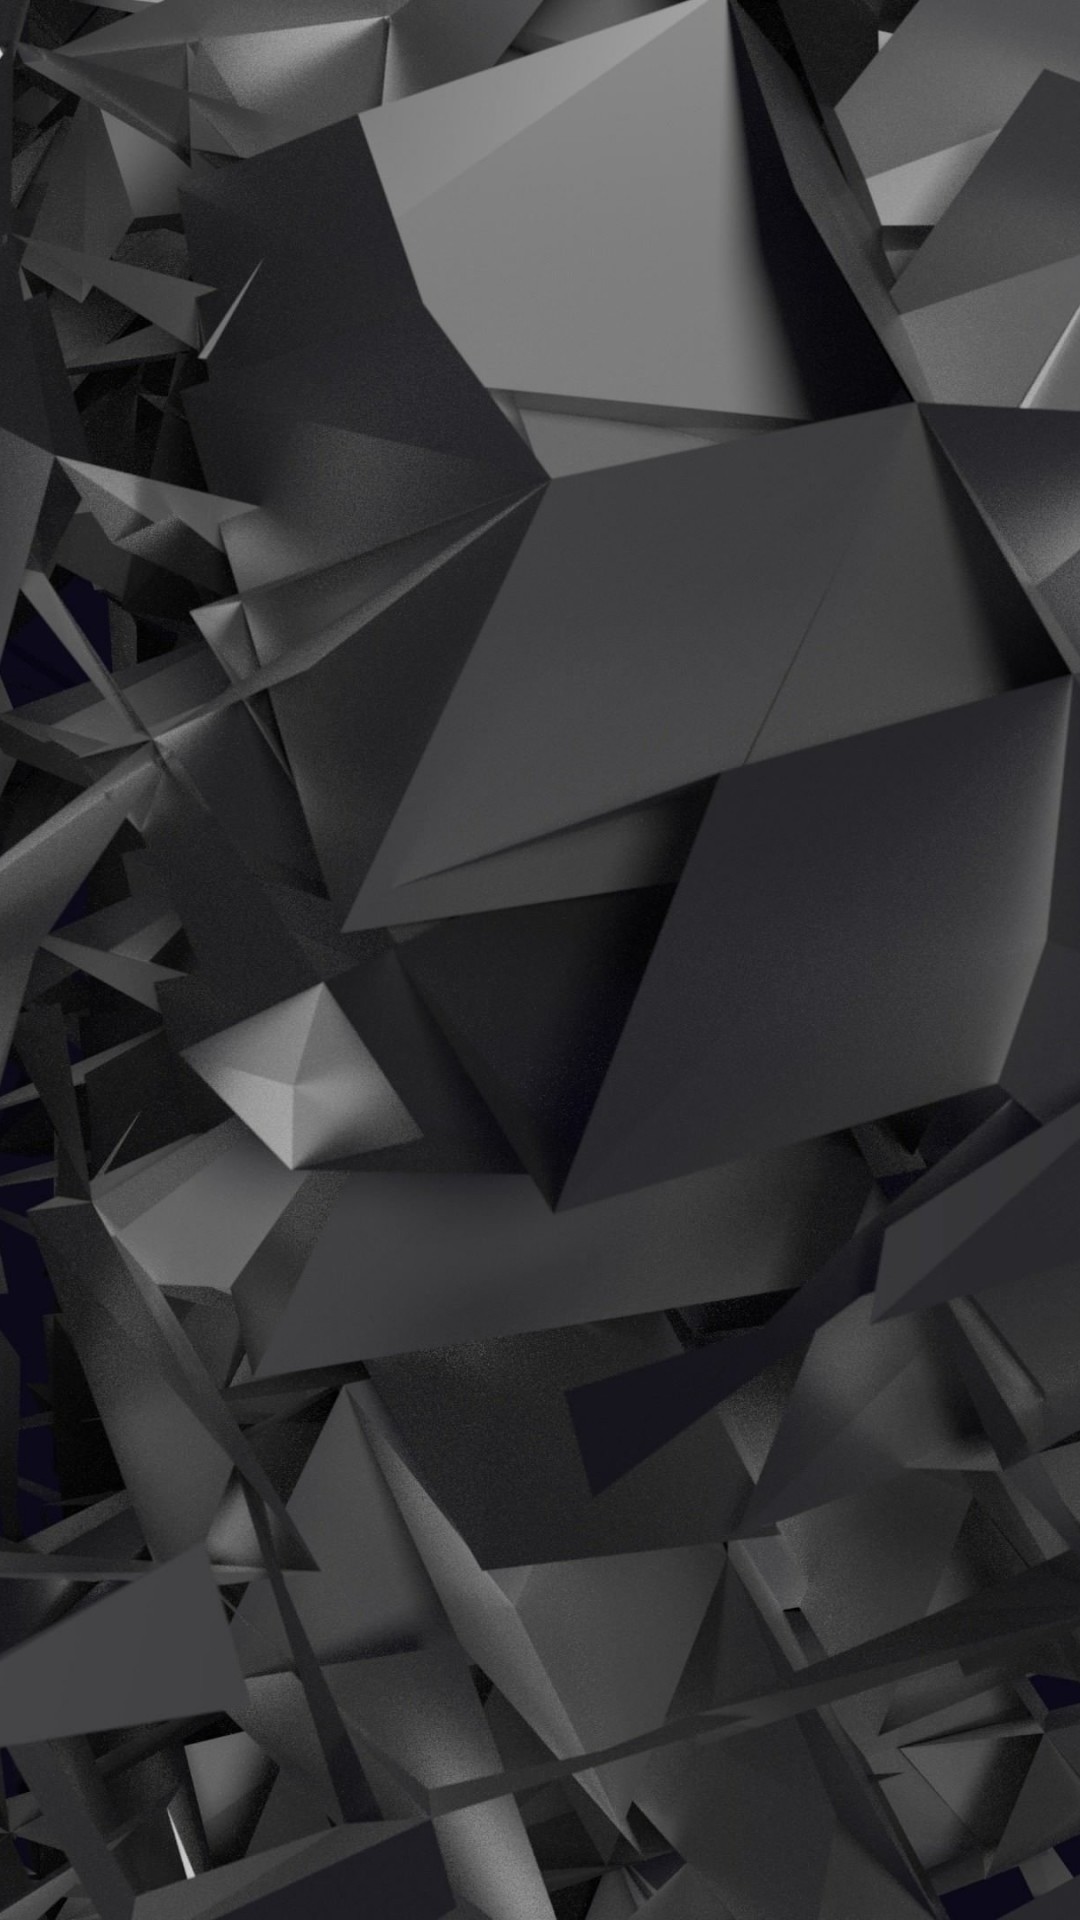 3D Geometry Wallpaper for Google Nexus 5